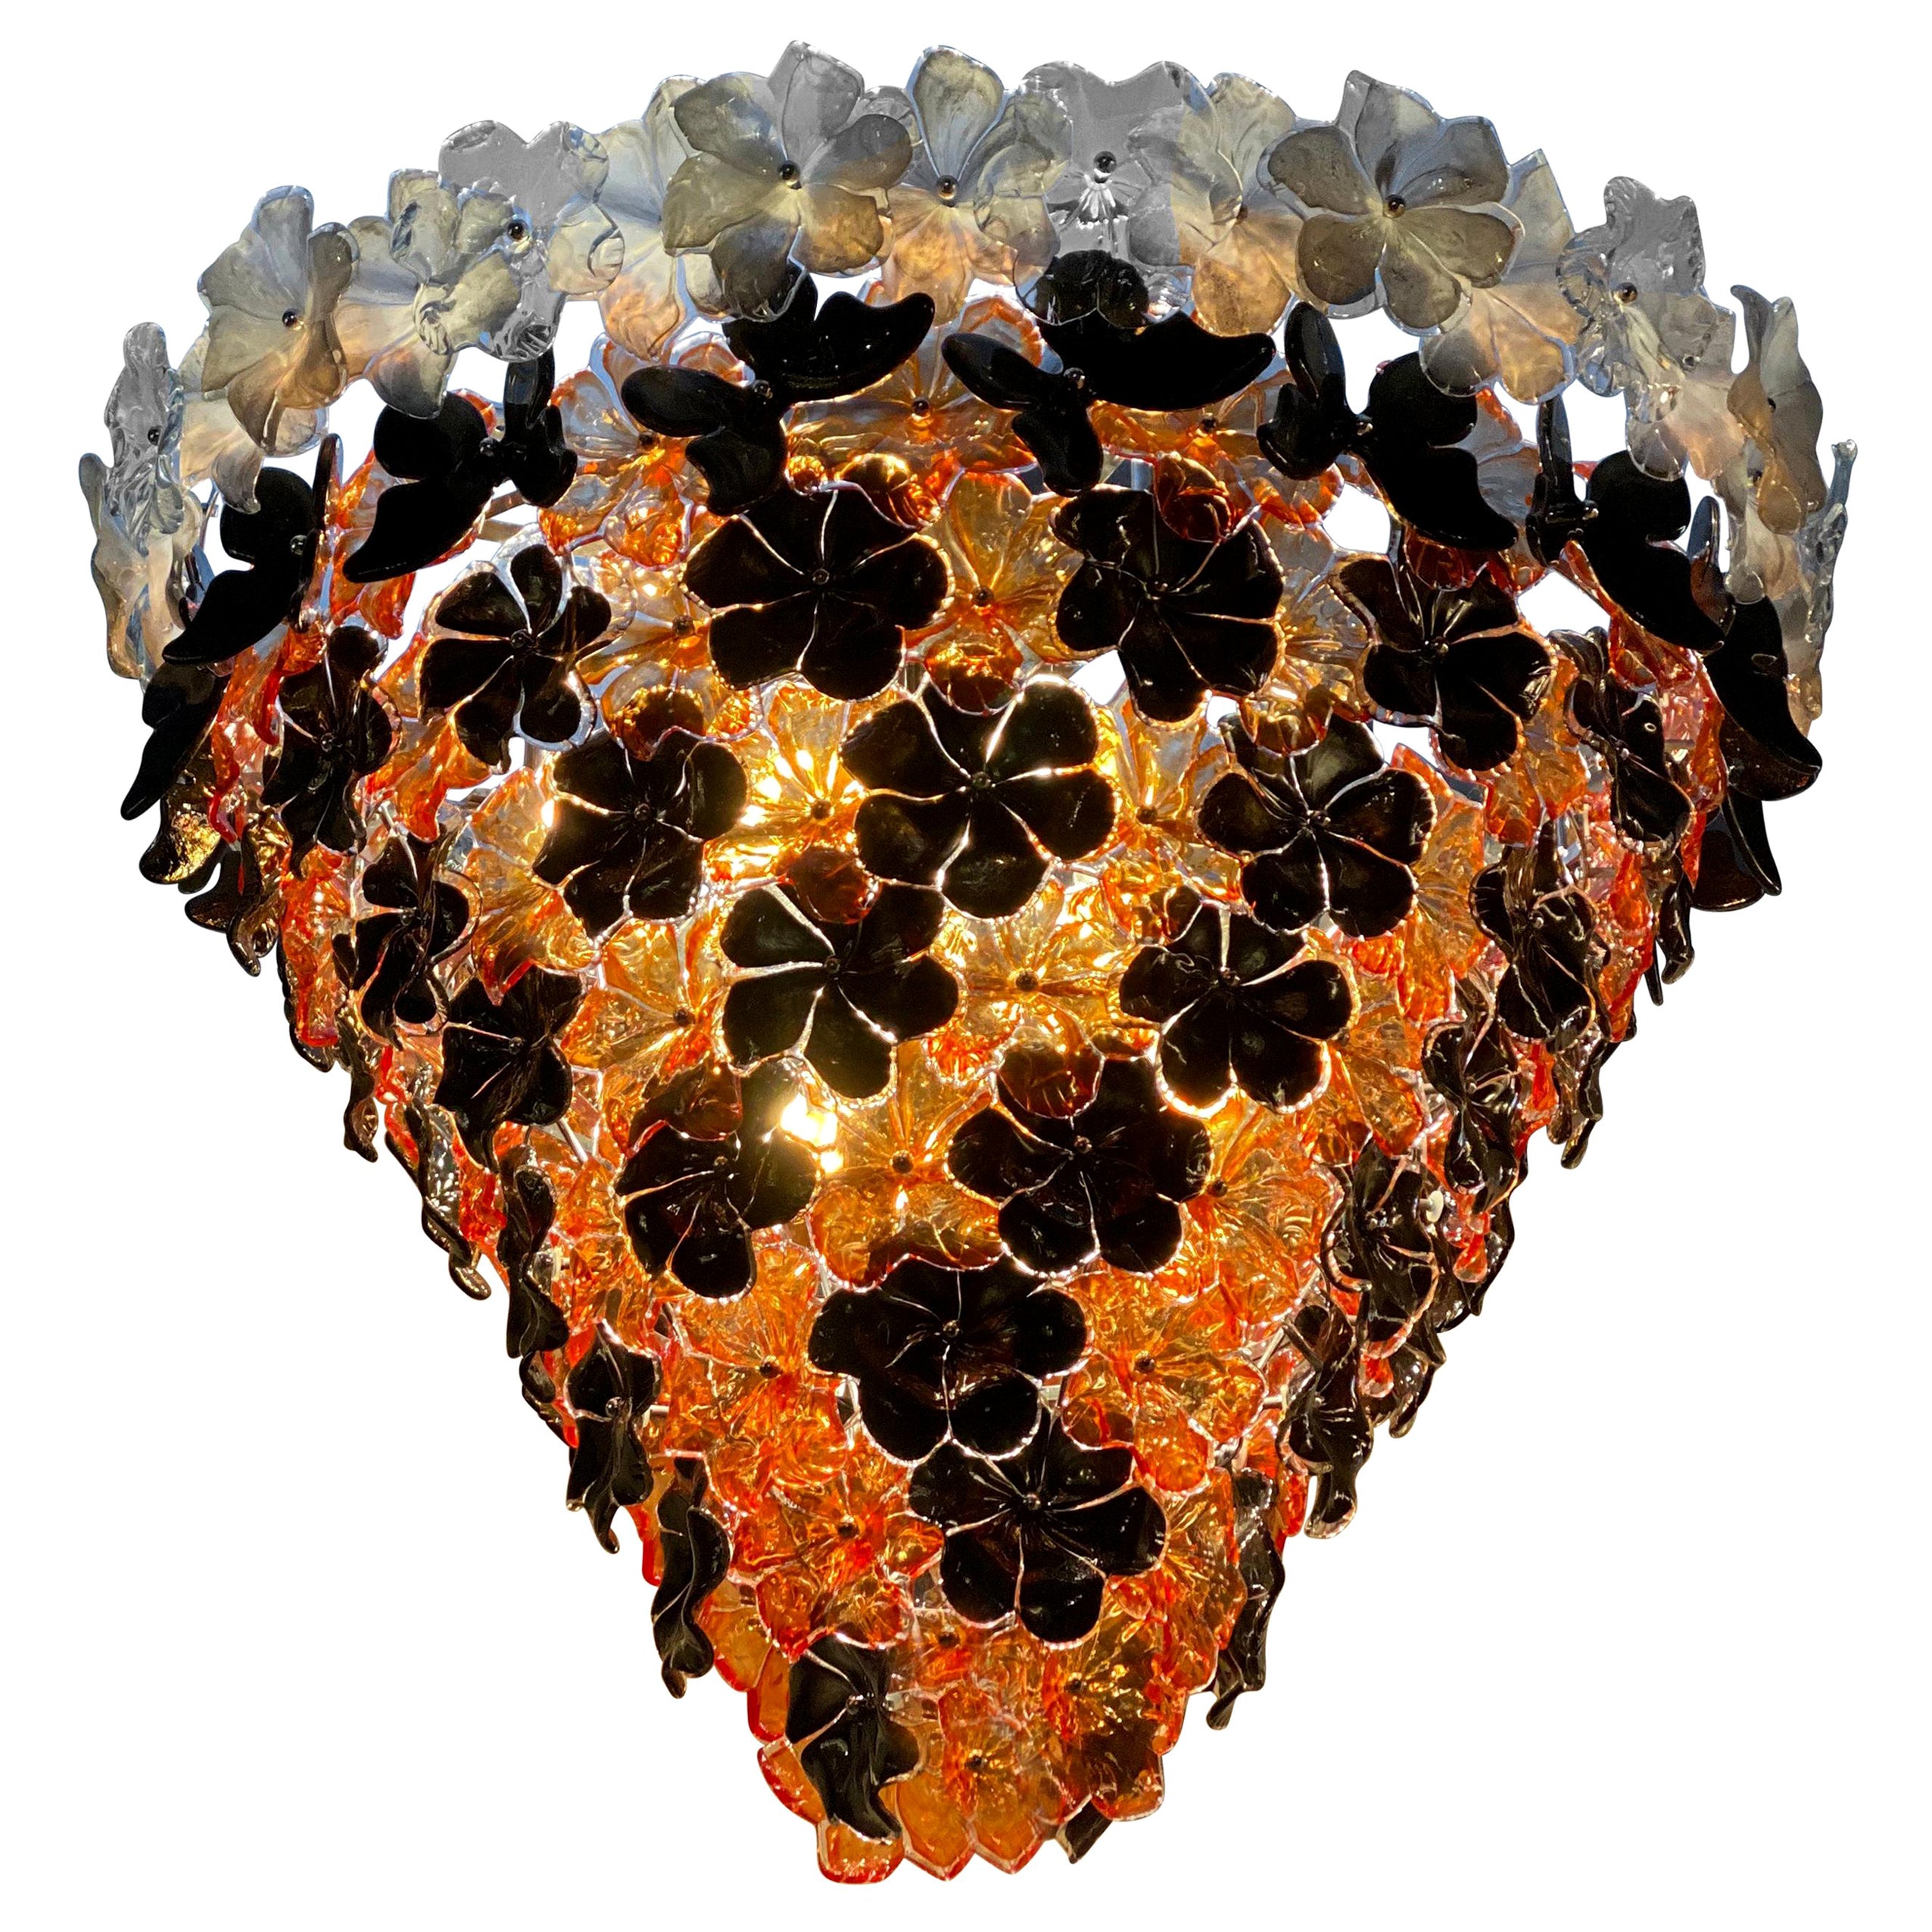 Araña contemporánea de cristal de Murano con flores negras y naranjas